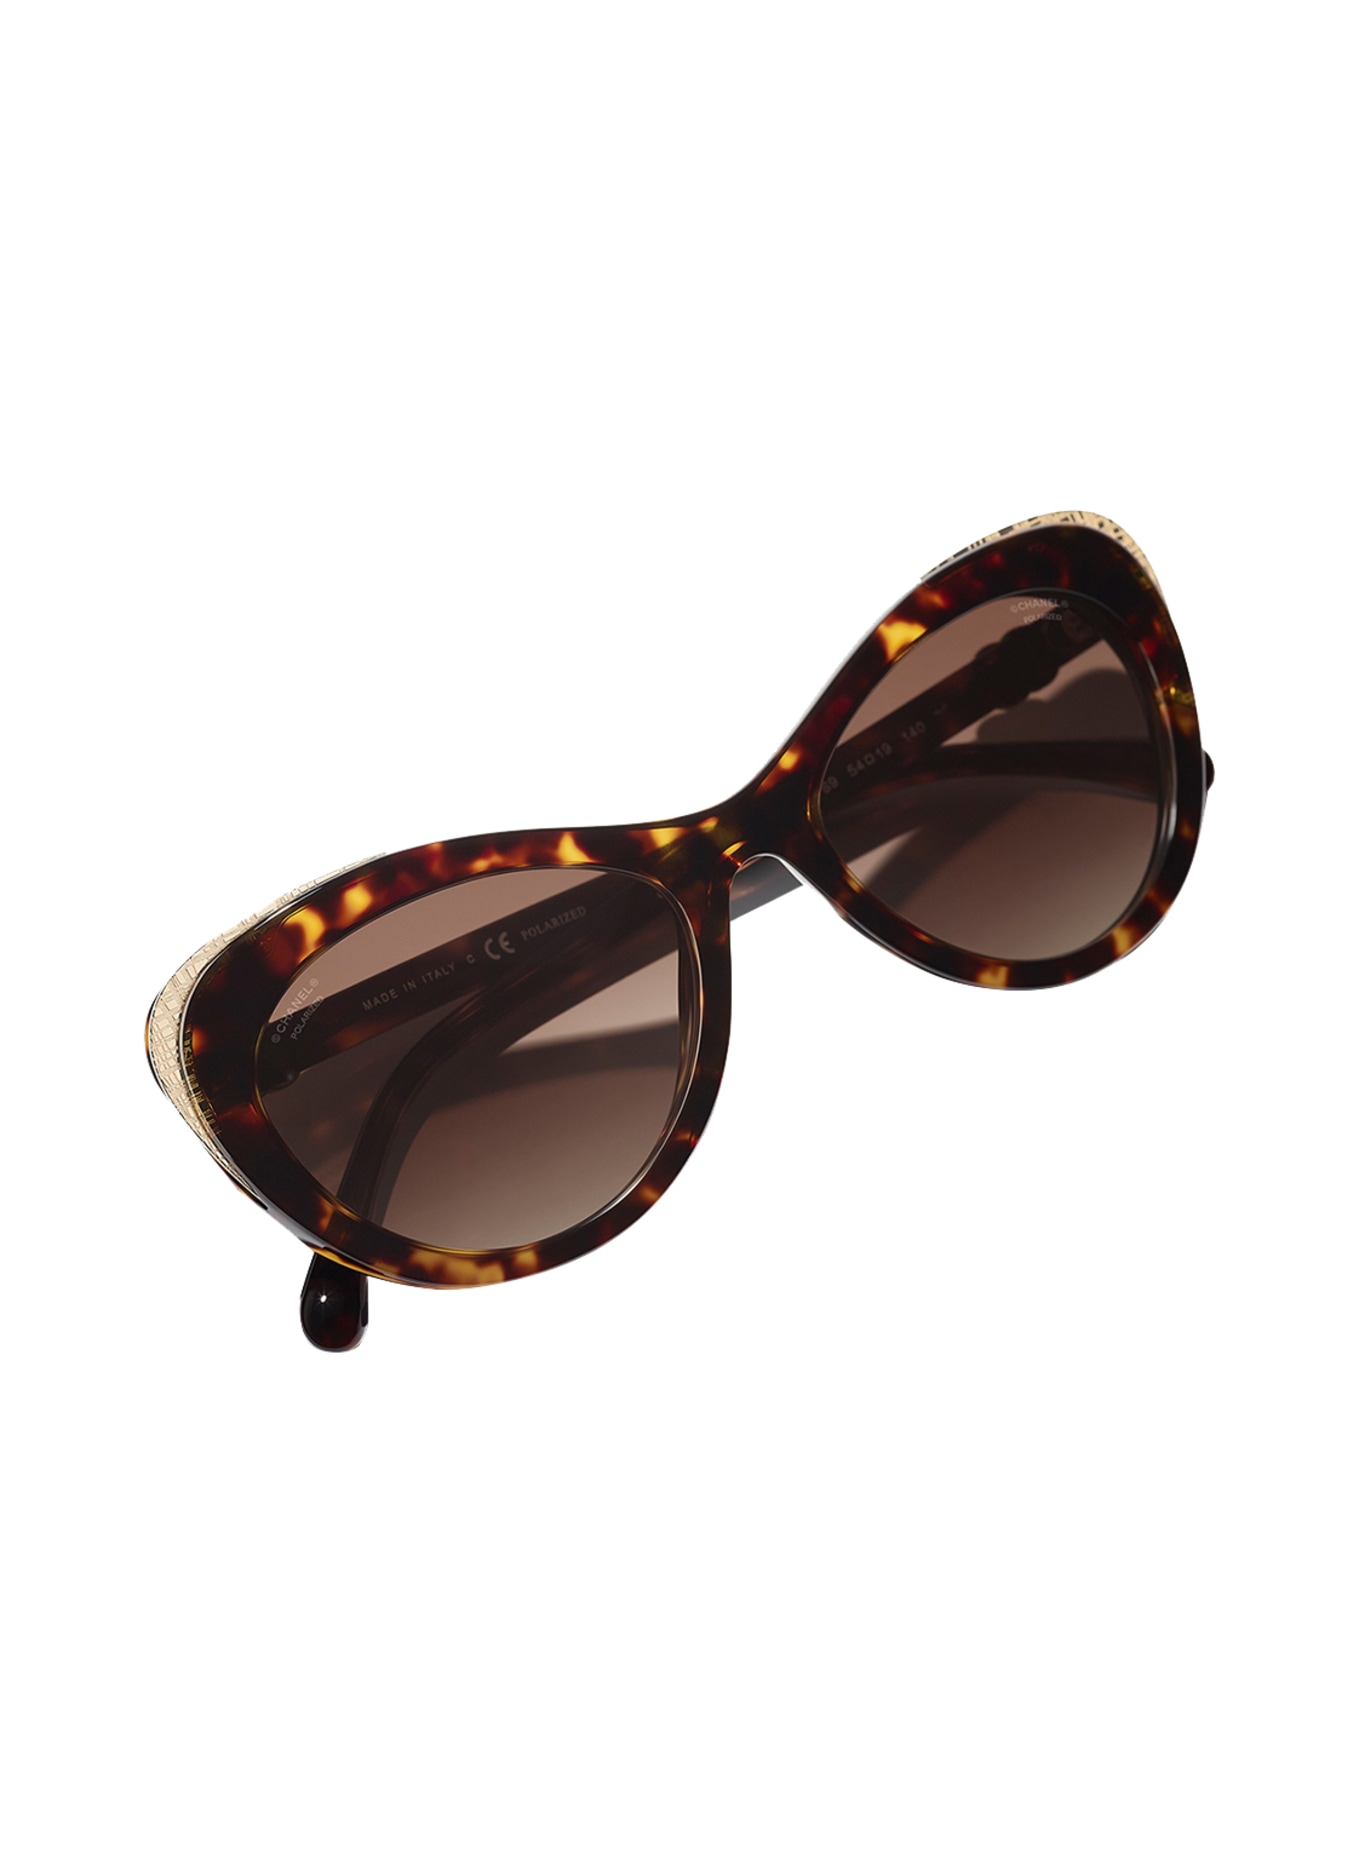 CHANEL Cat-eye shaped sunglasses in c714s9 - havana/ brown polarized